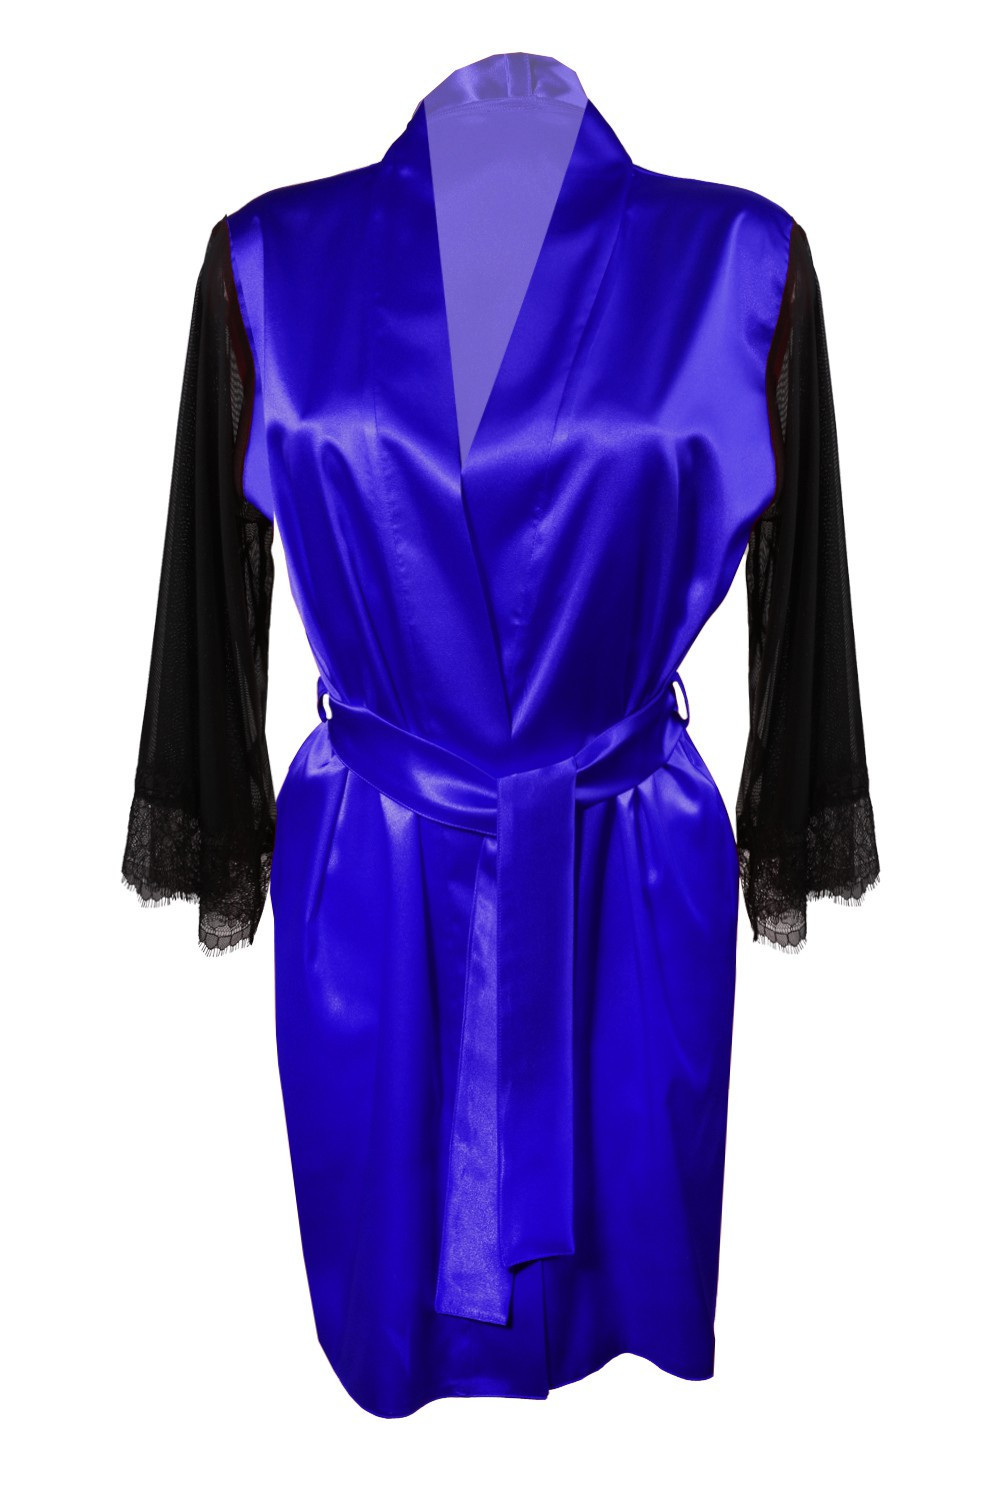 Housecoat model 18227235 Blue - DKaren Velikost: L, Barva: Modrá